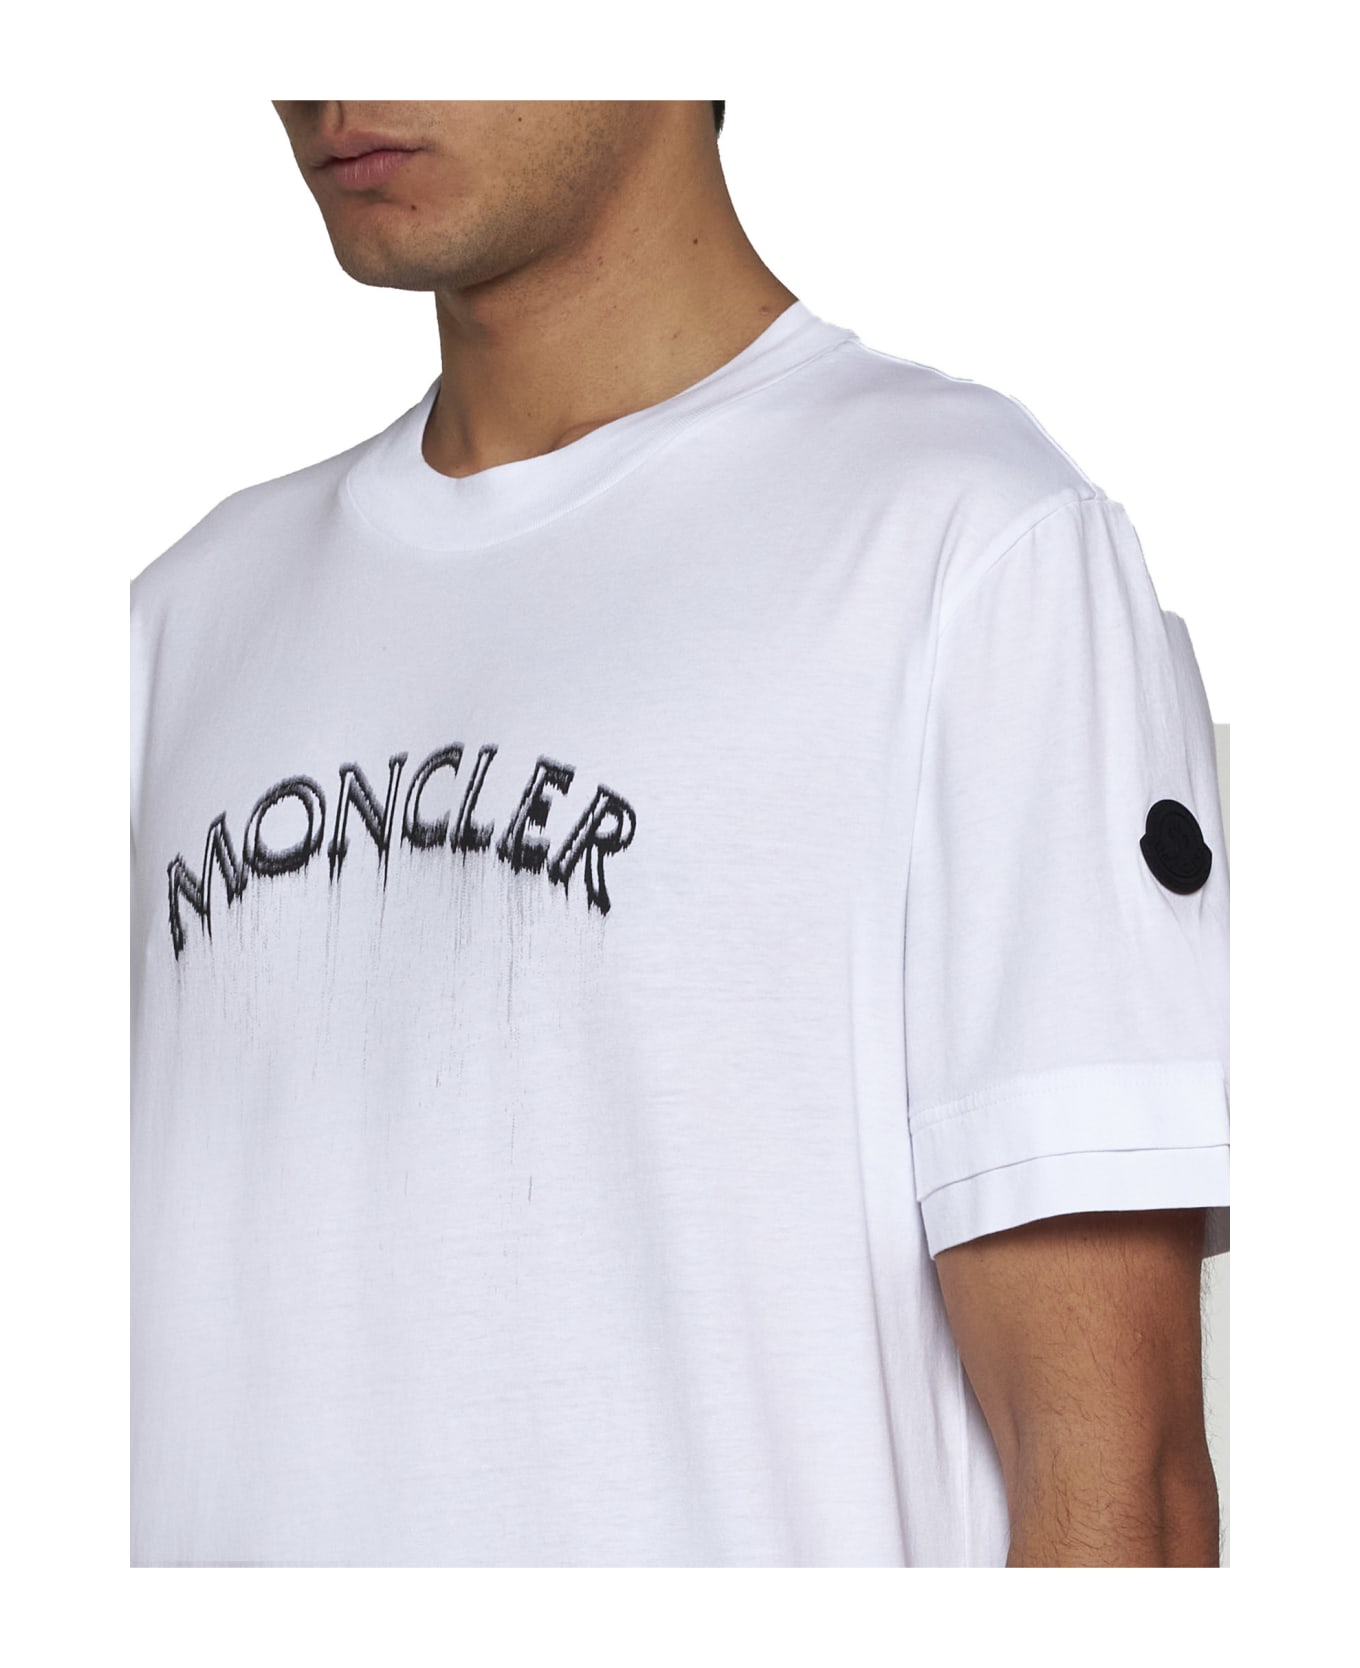 Moncler T-Shirt - Bianco